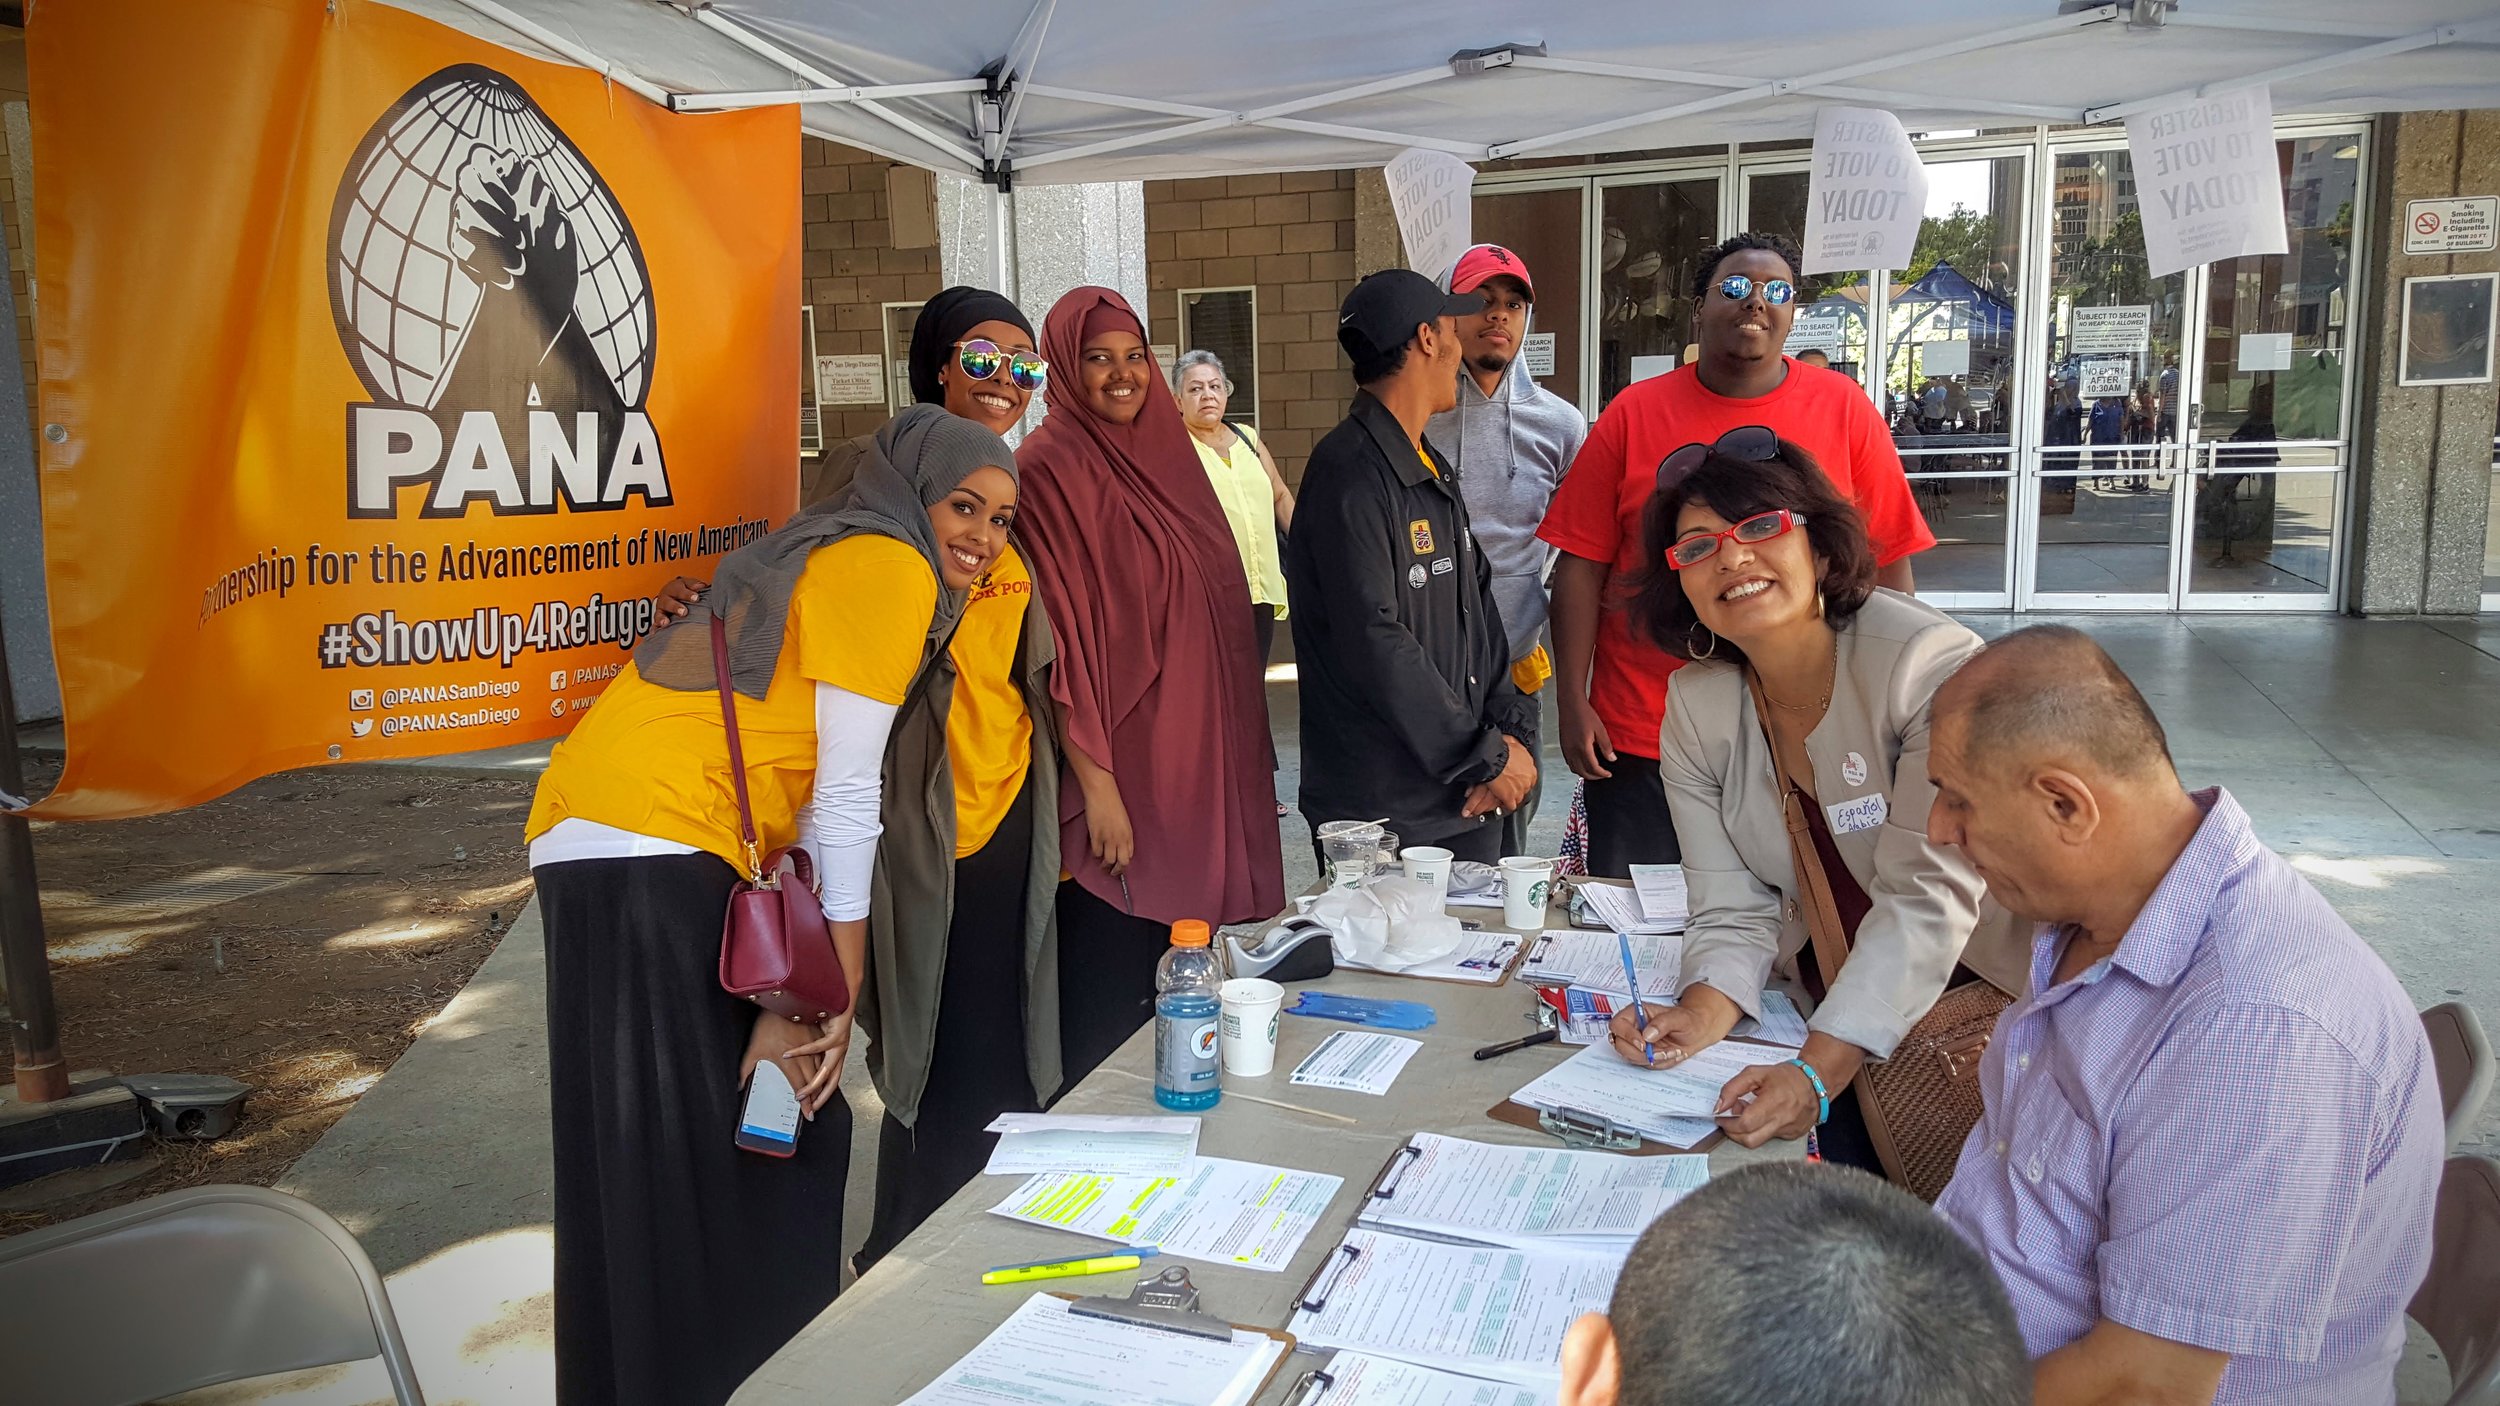 Summer Voter Registration Drive - 731 new voters